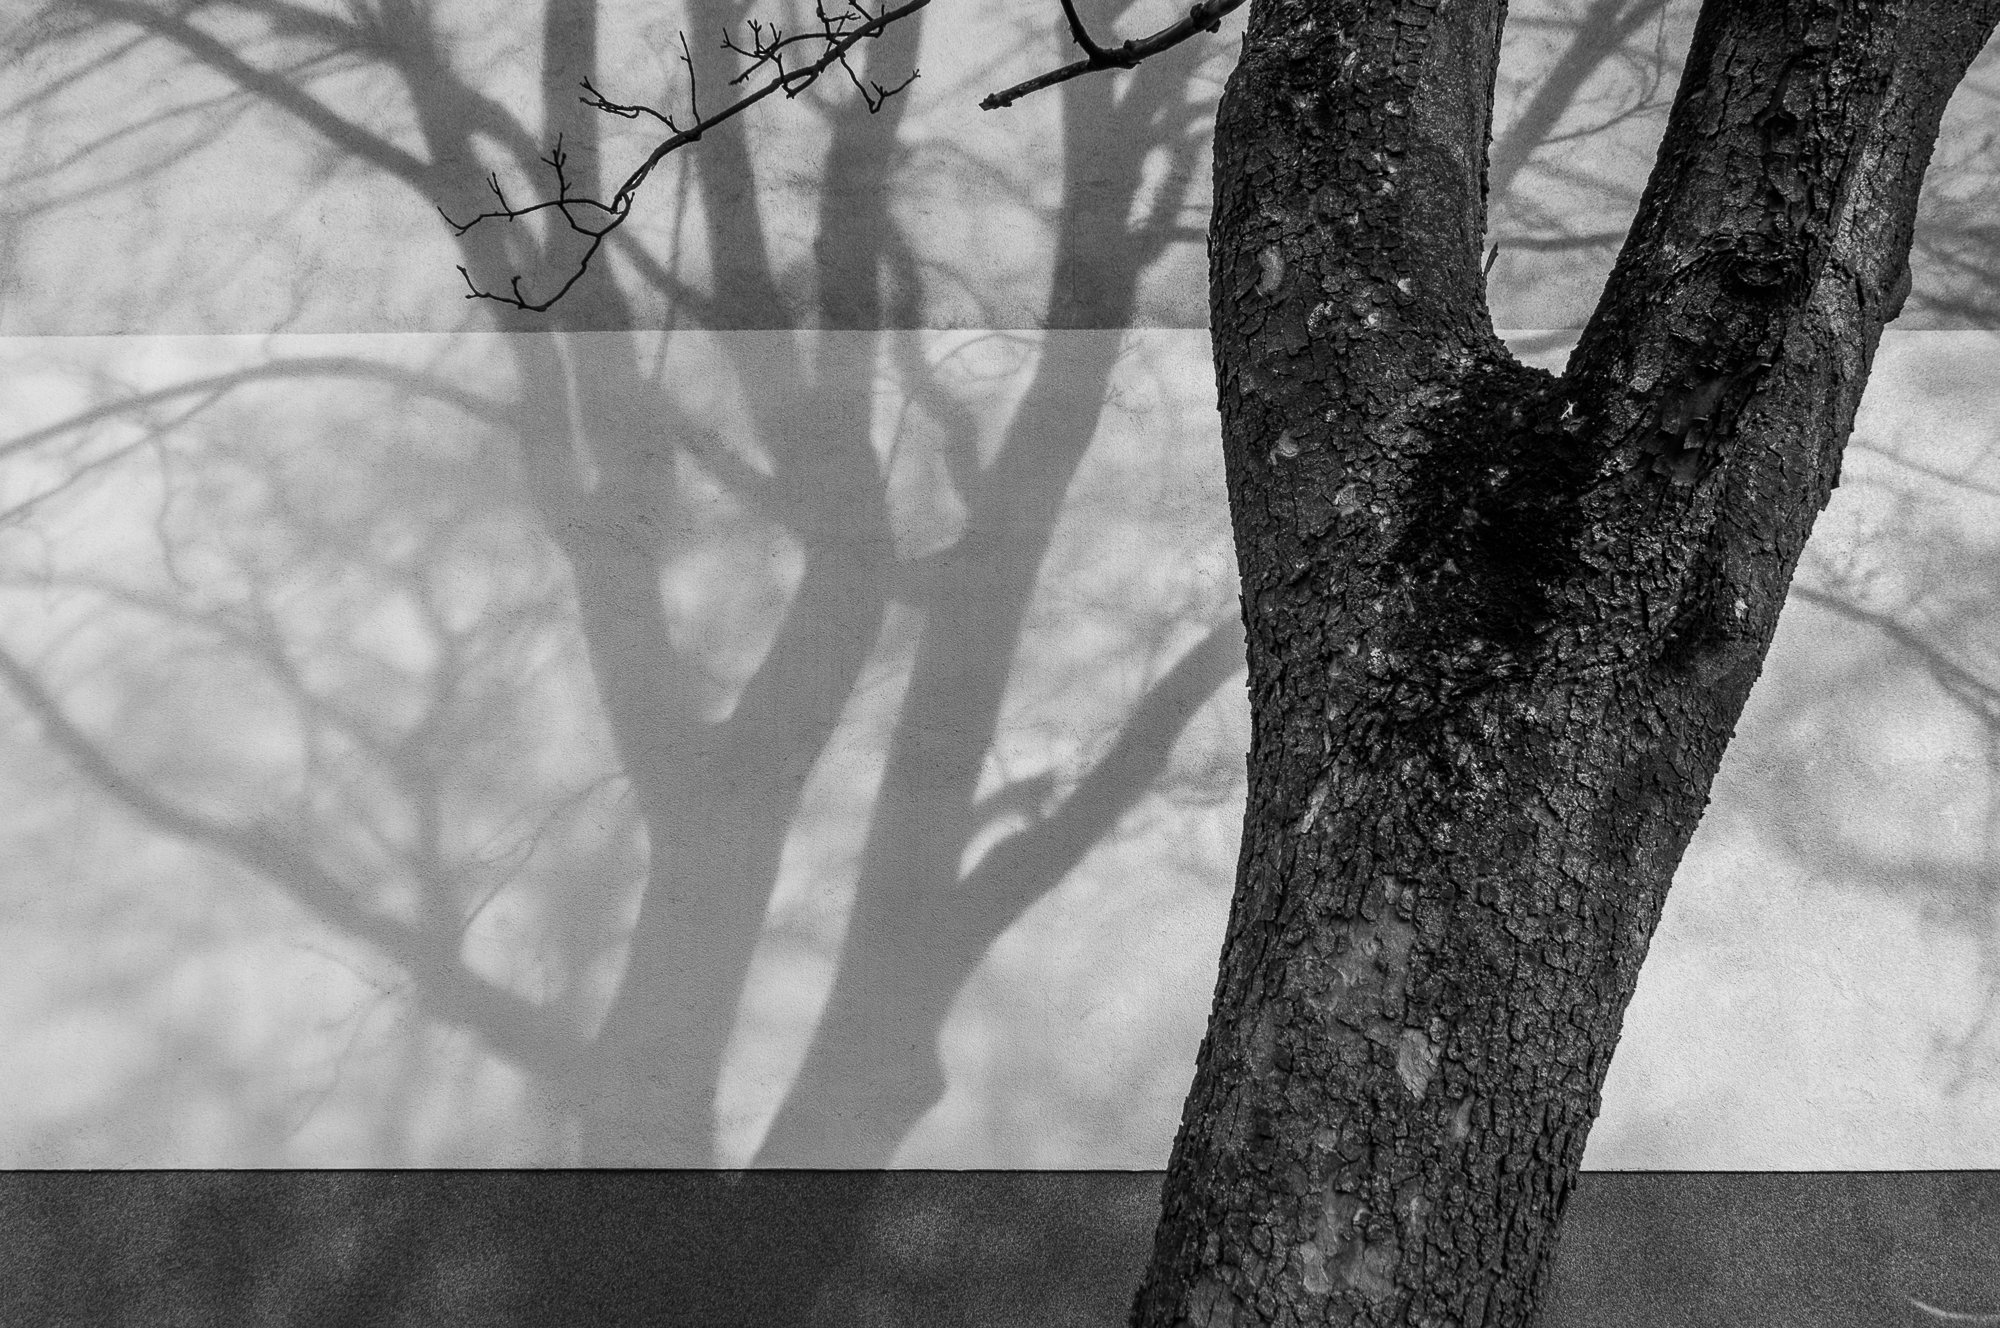 Adam Mazek Photography Warsaw (Warszawa) 2020. Post: "The desire to write." Minimalism. Tree and the shadow.